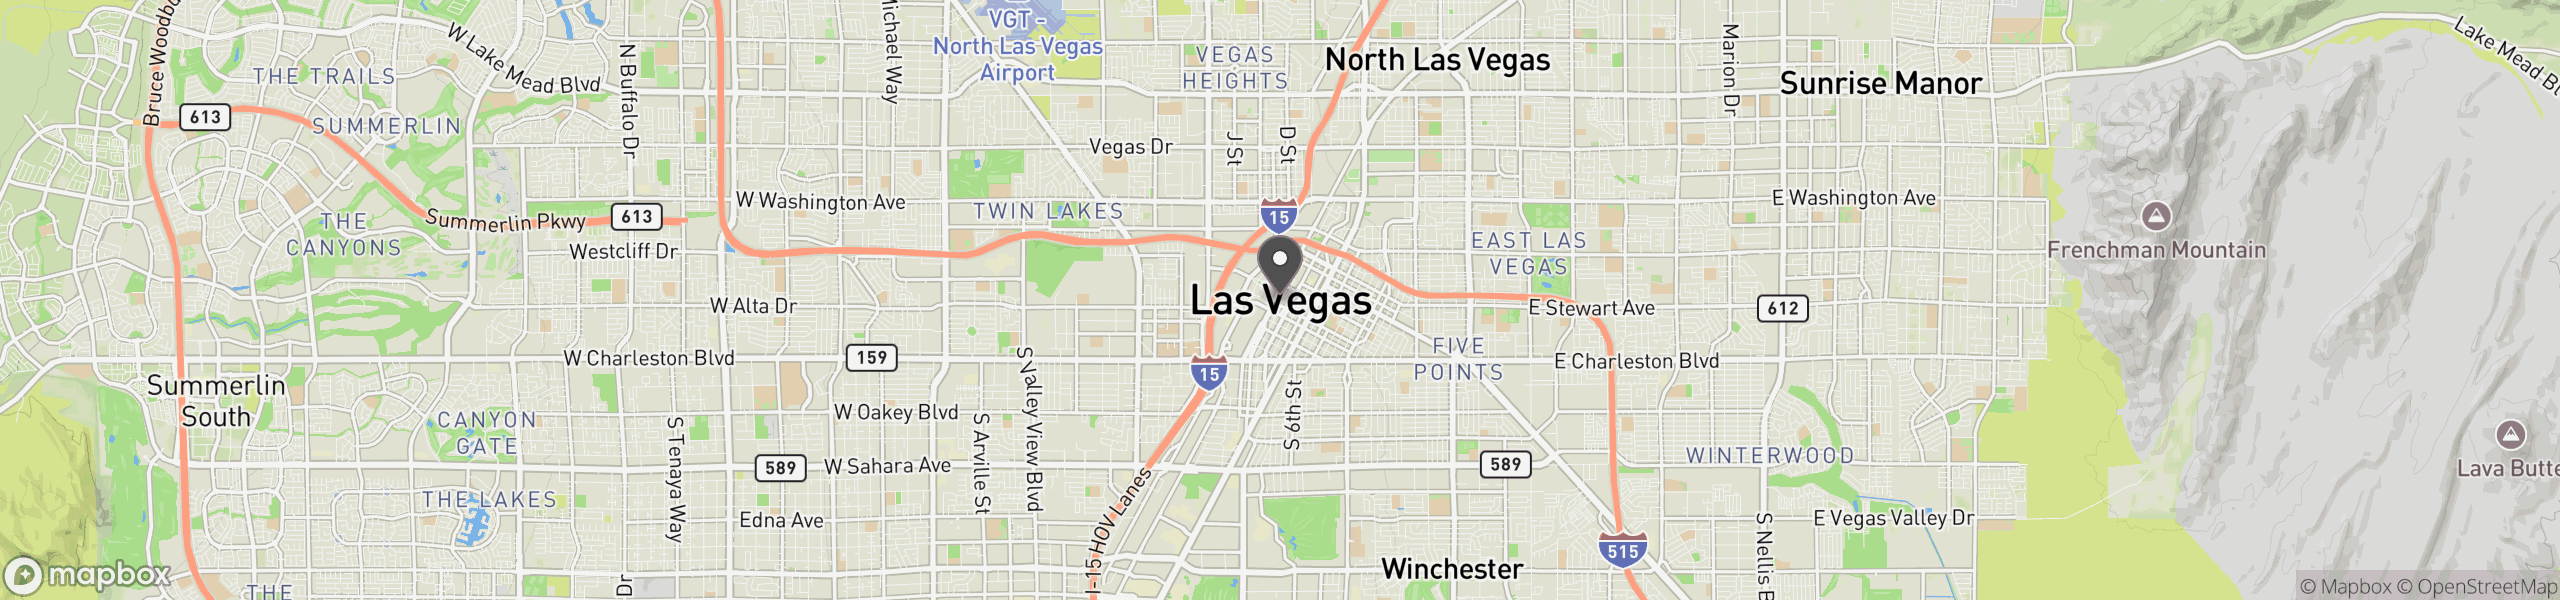 Las Vegas, NV 89111